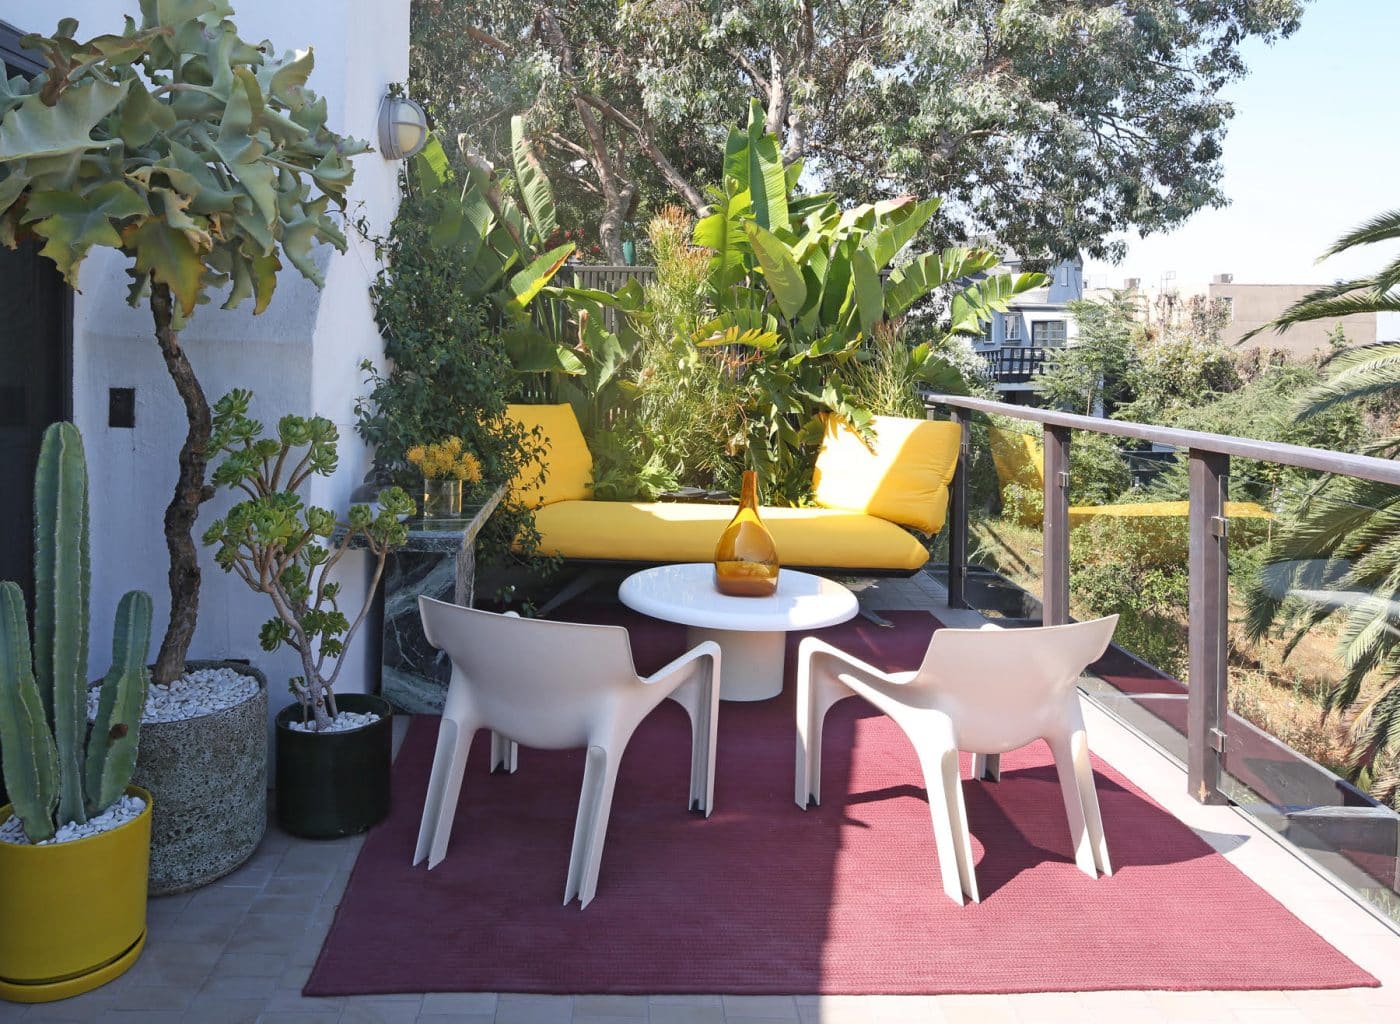 The terrace of Giampiero Tagliaferri's home in L.A.'s Silver Lake neighborhood